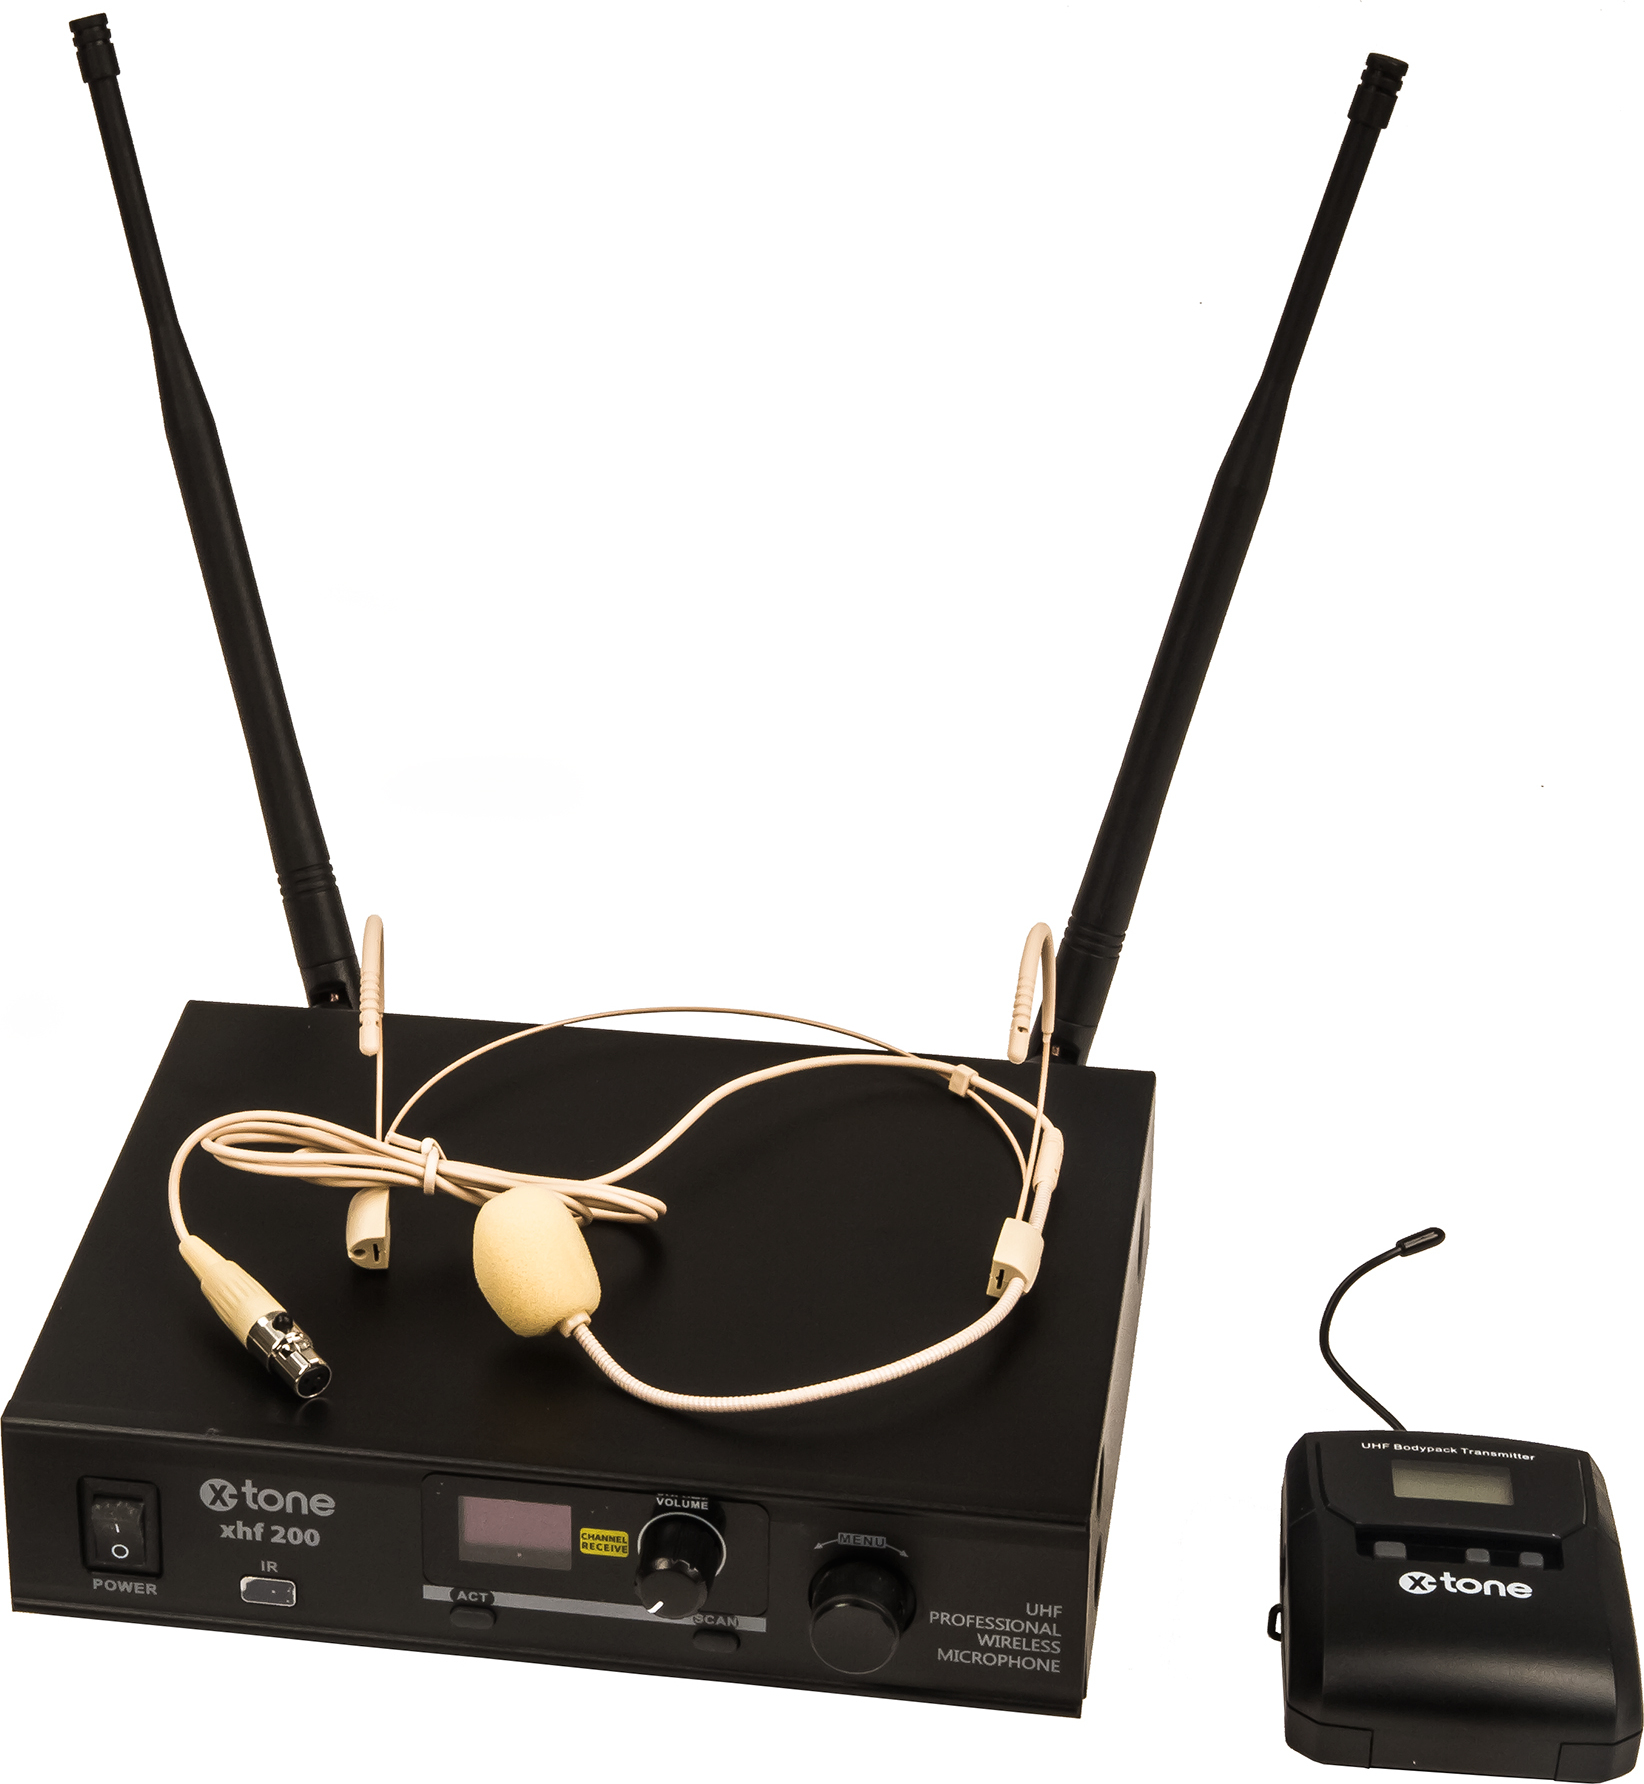 X-tone Xhf200h Systeme Hf Serre Tete Multi Frequences - Wireless headworn microphone - Main picture